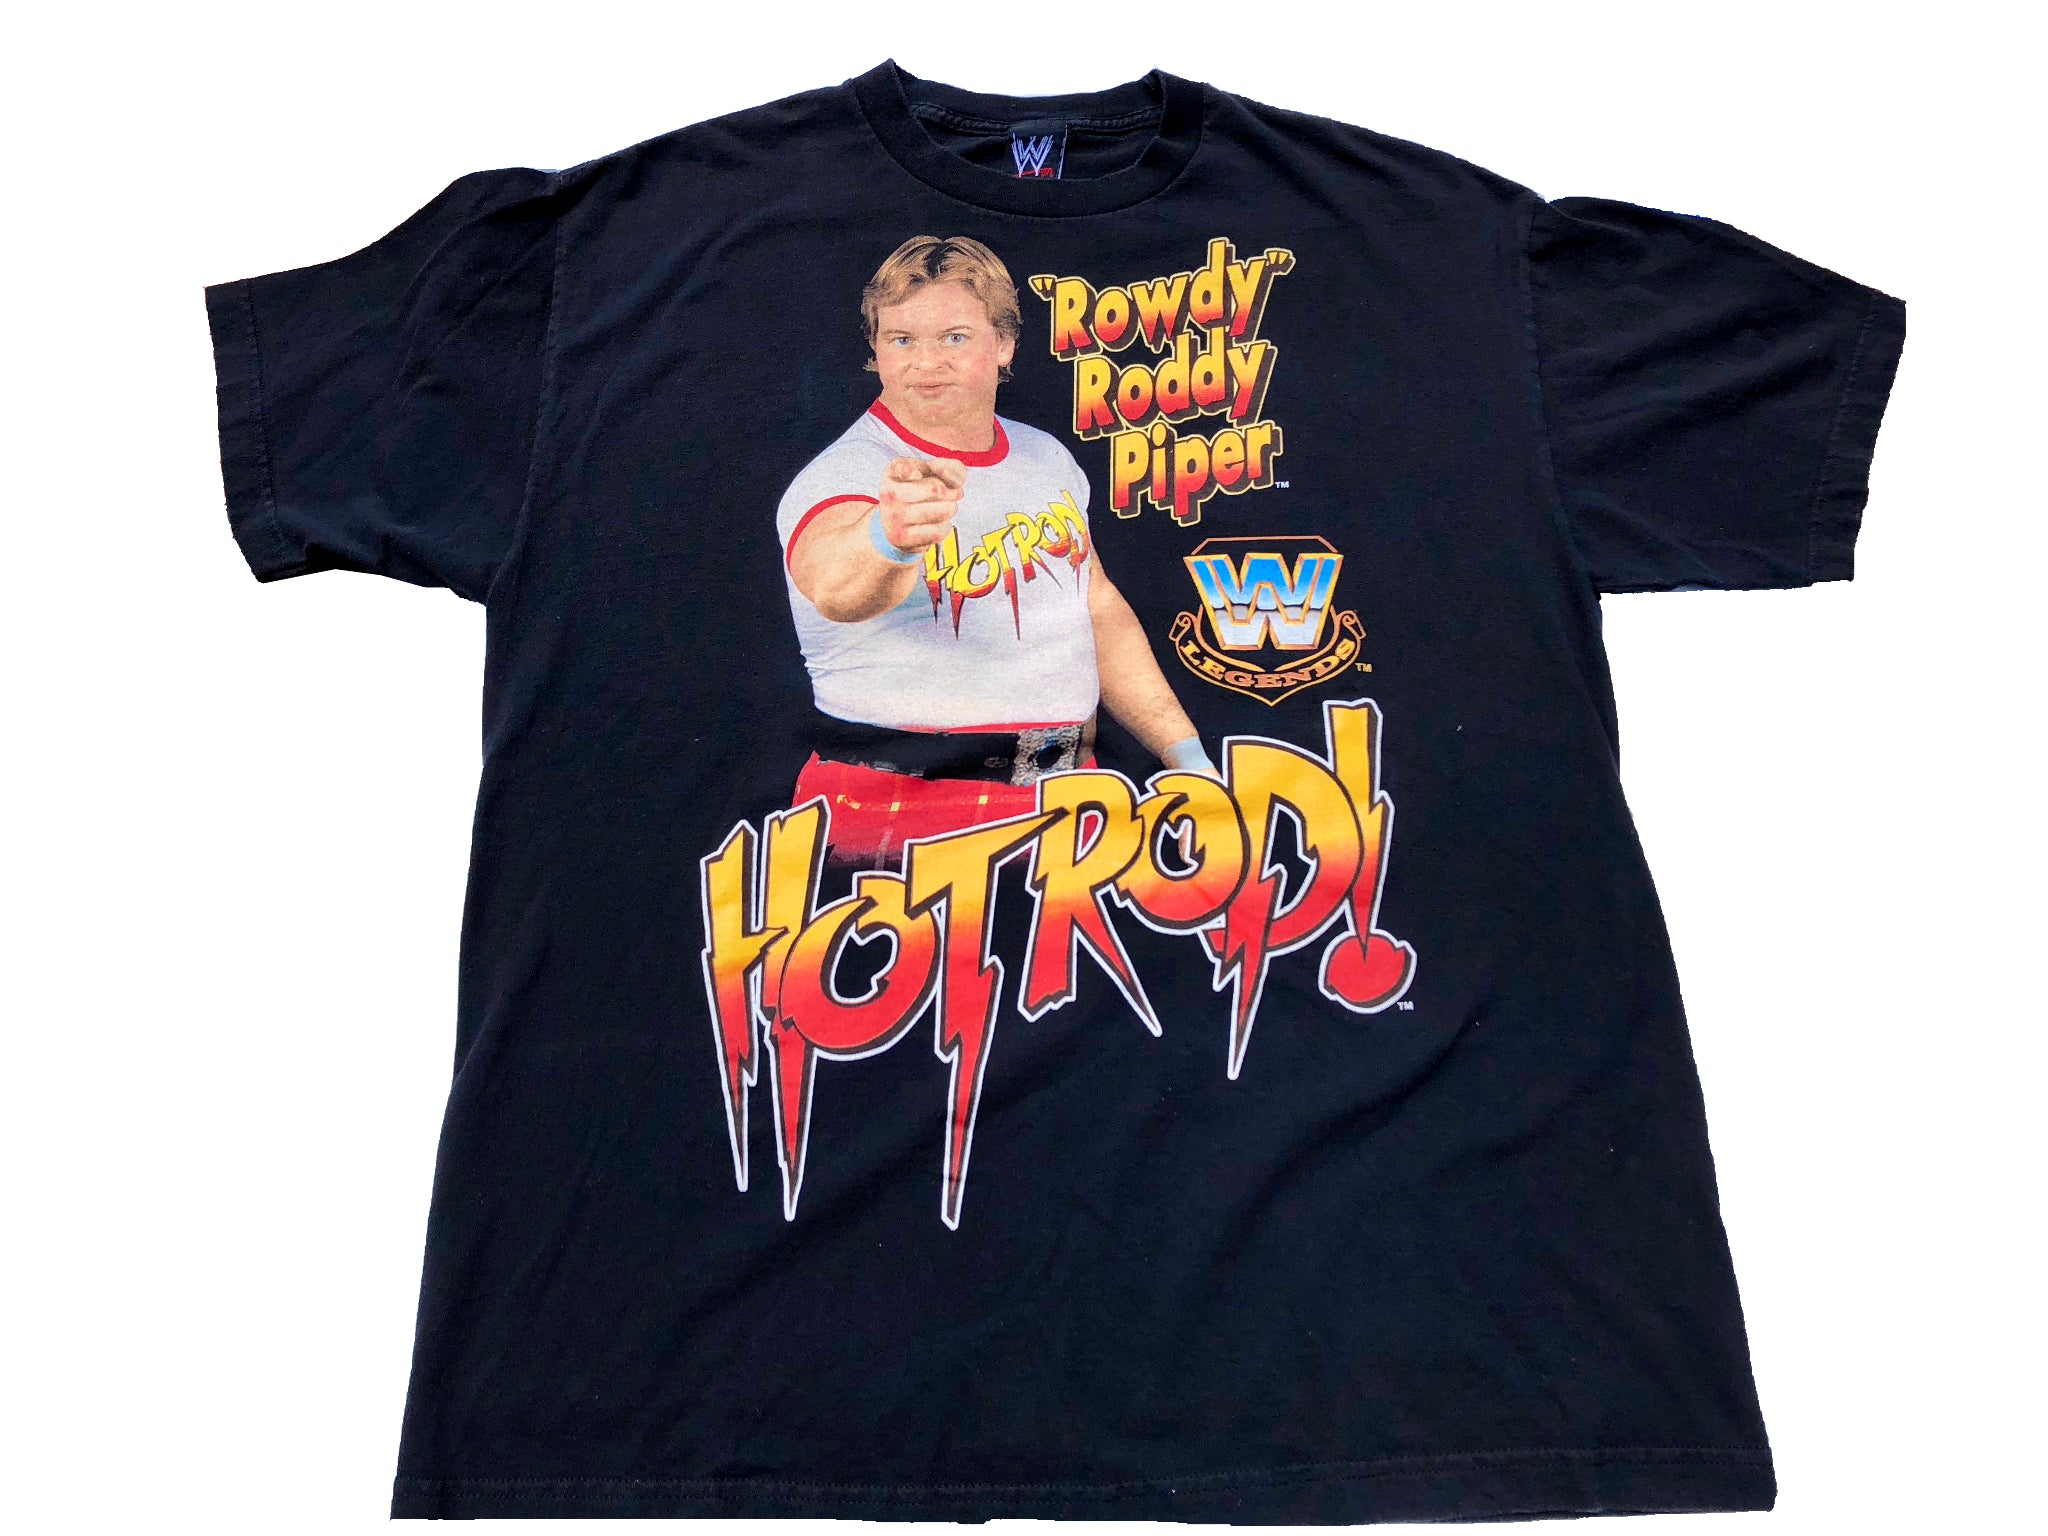 2007 WWE Rowdy Roddy Piper "Hot Rod" Shirt X-Large Black - Beyond 94